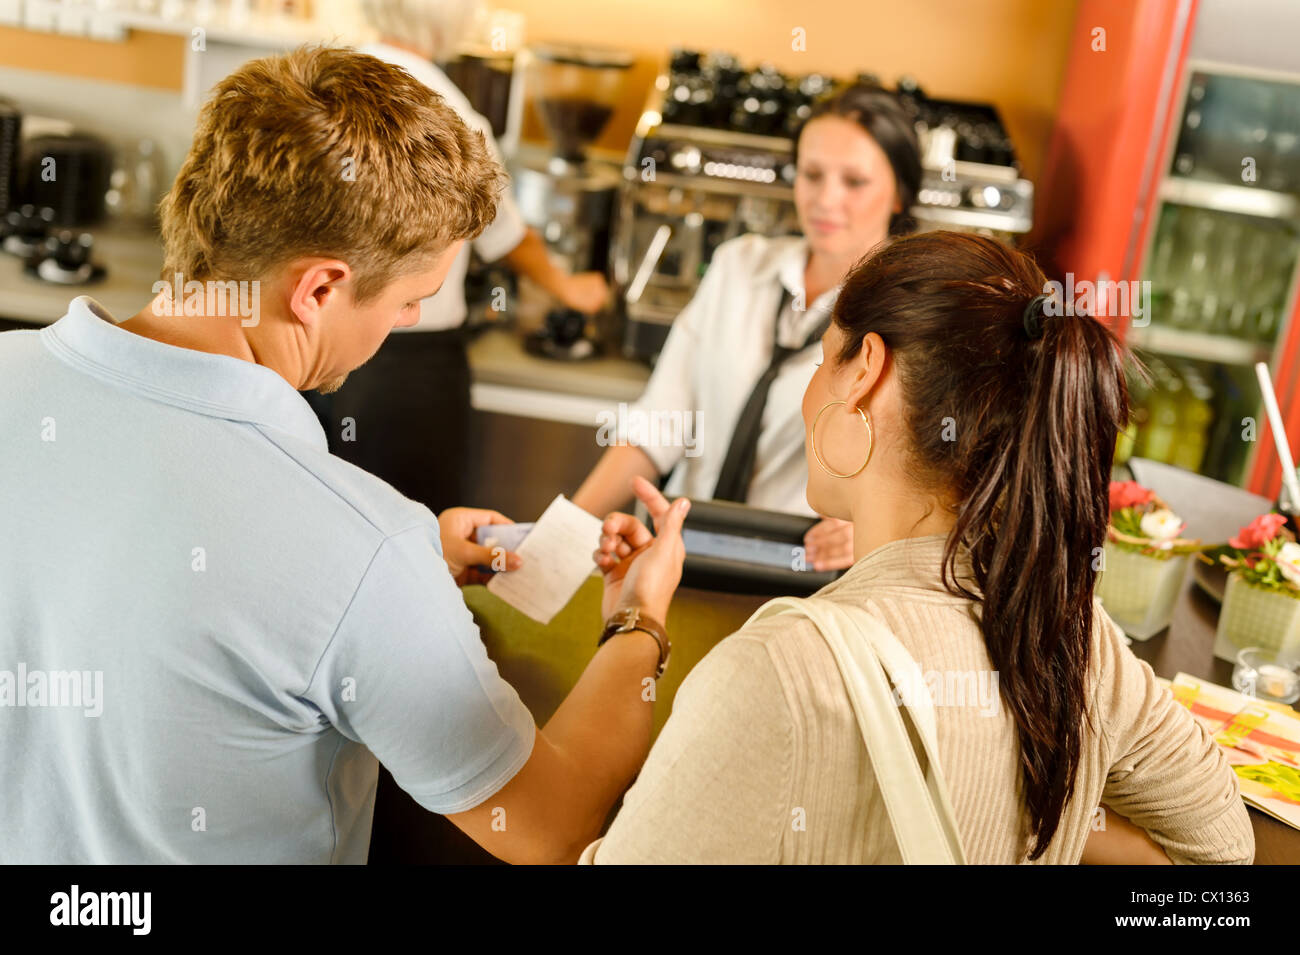 Man checking receipt at cafe restaurant payment waitress couple bar Stock Photo